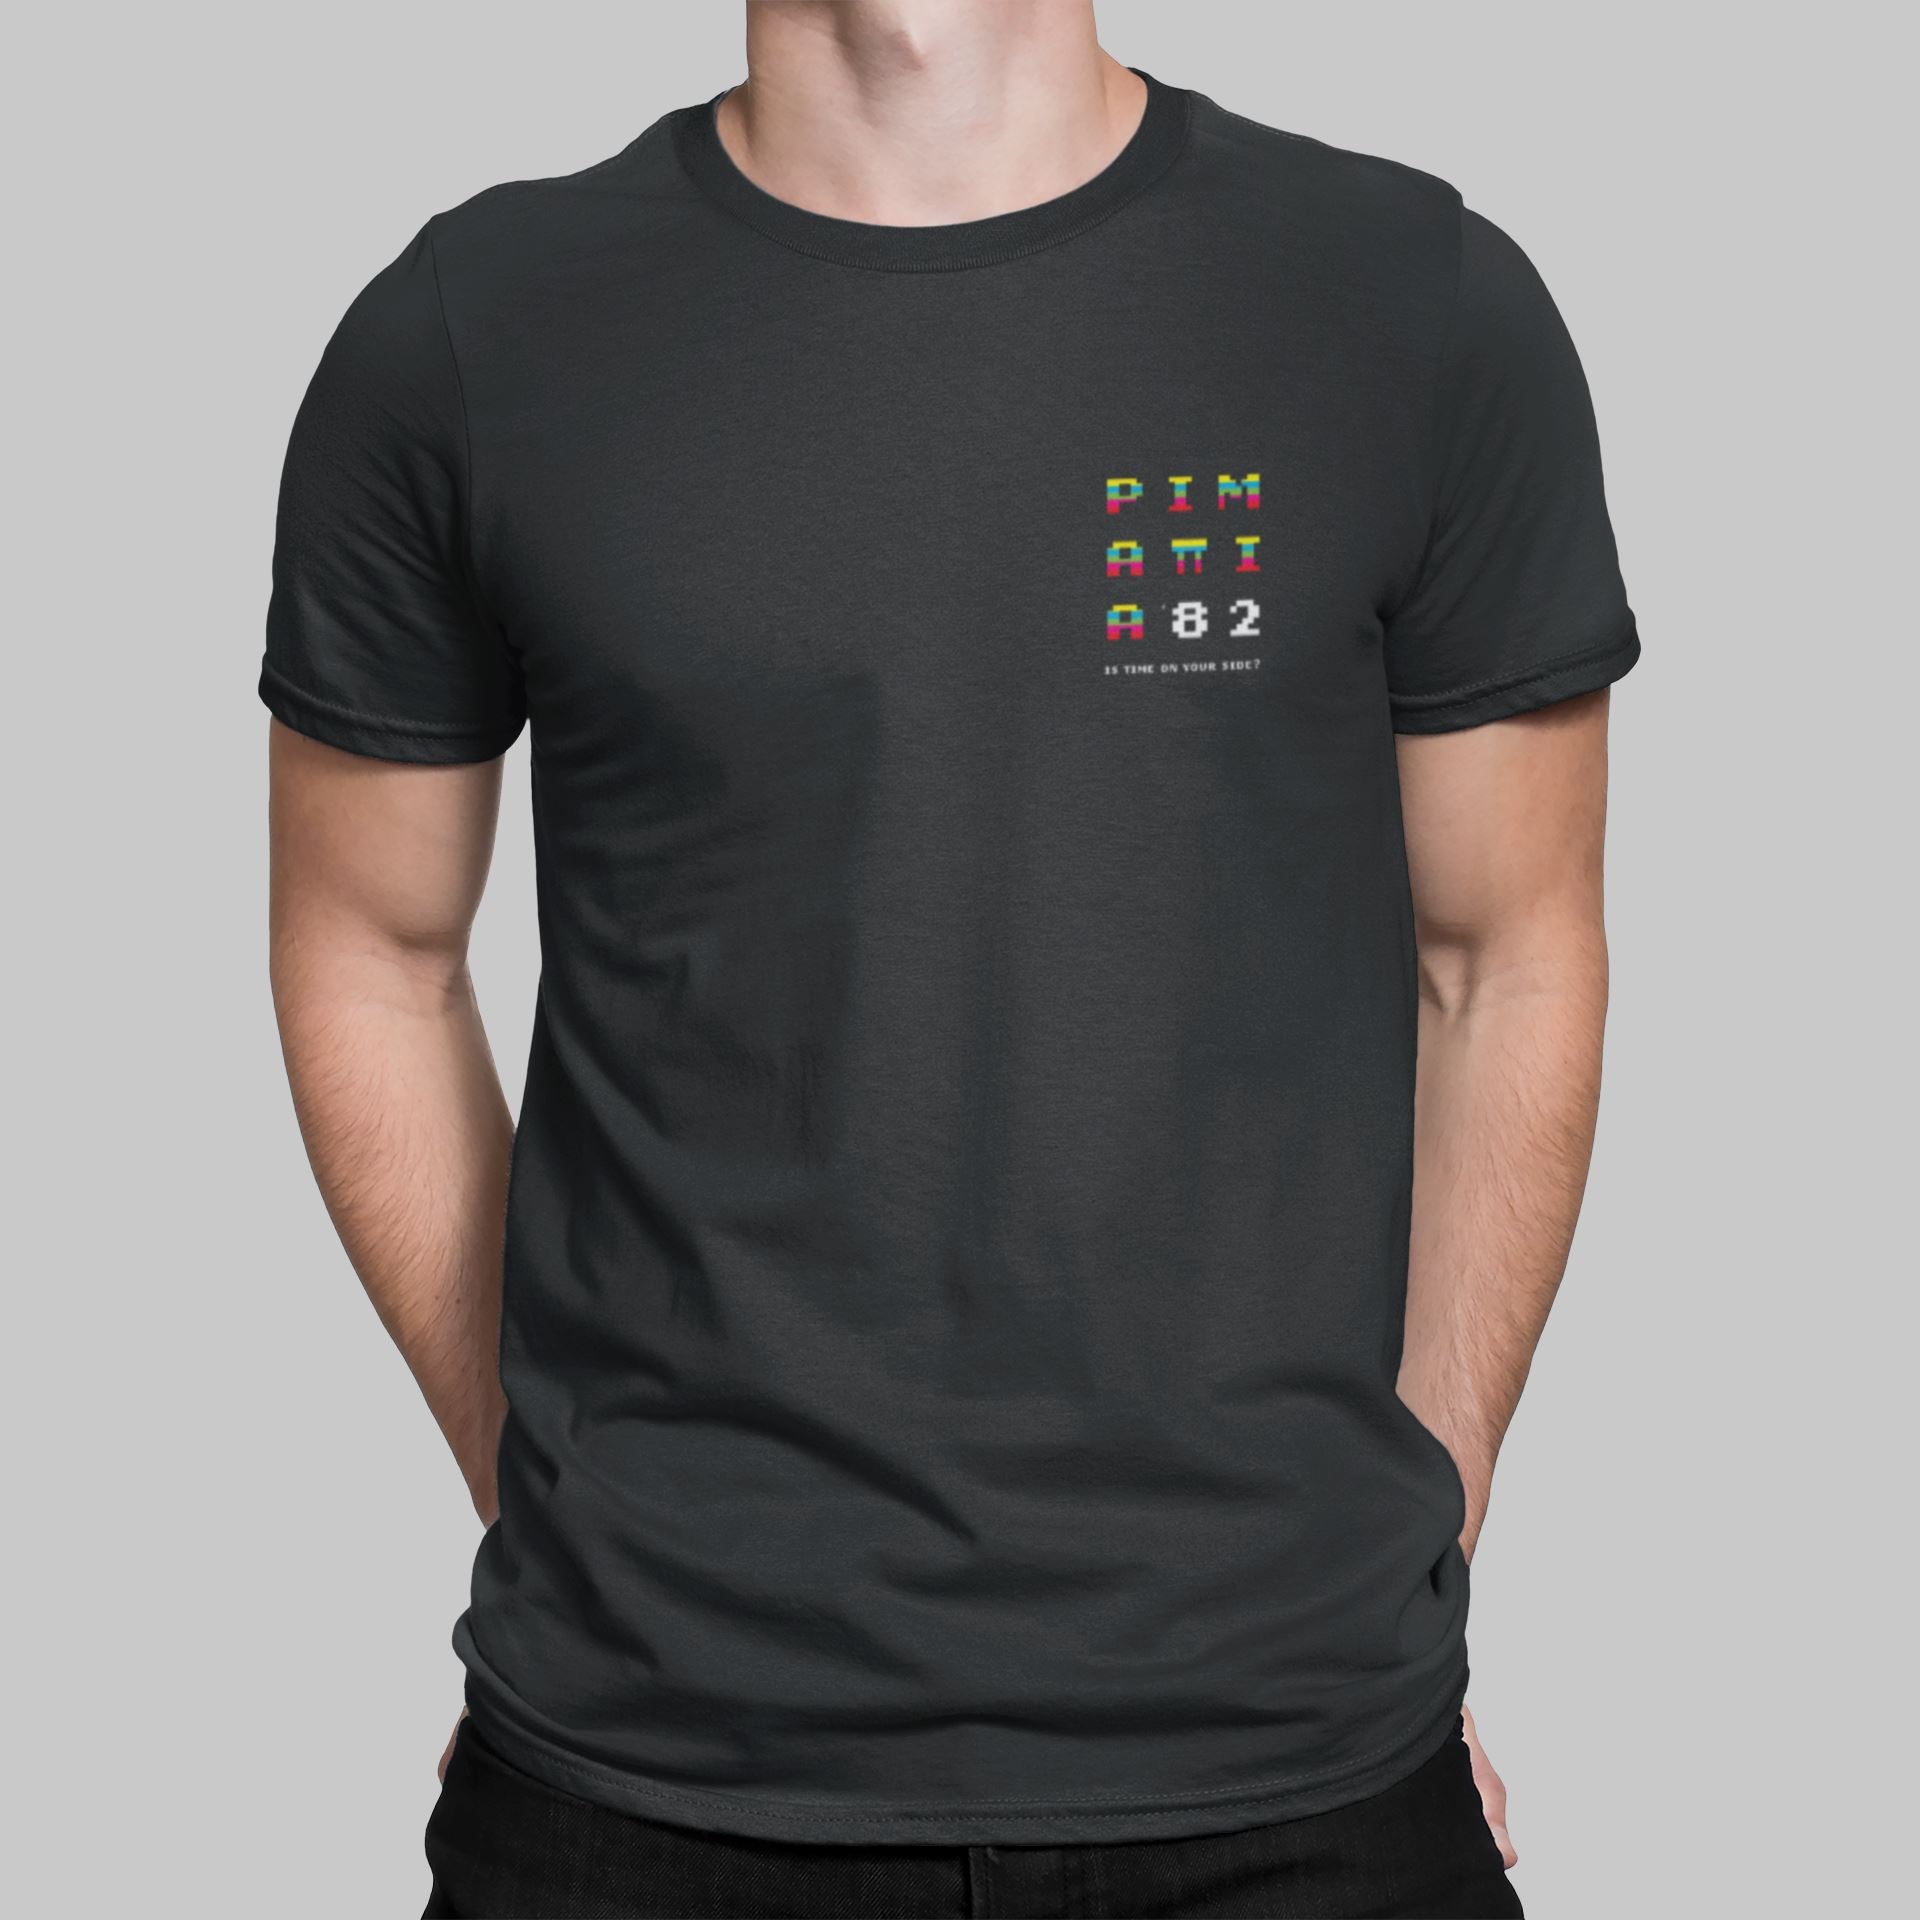 Pimania 82 Pocket Print Retro Gaming T-Shirt T-Shirt Seven Squared Small 34-36" Black 